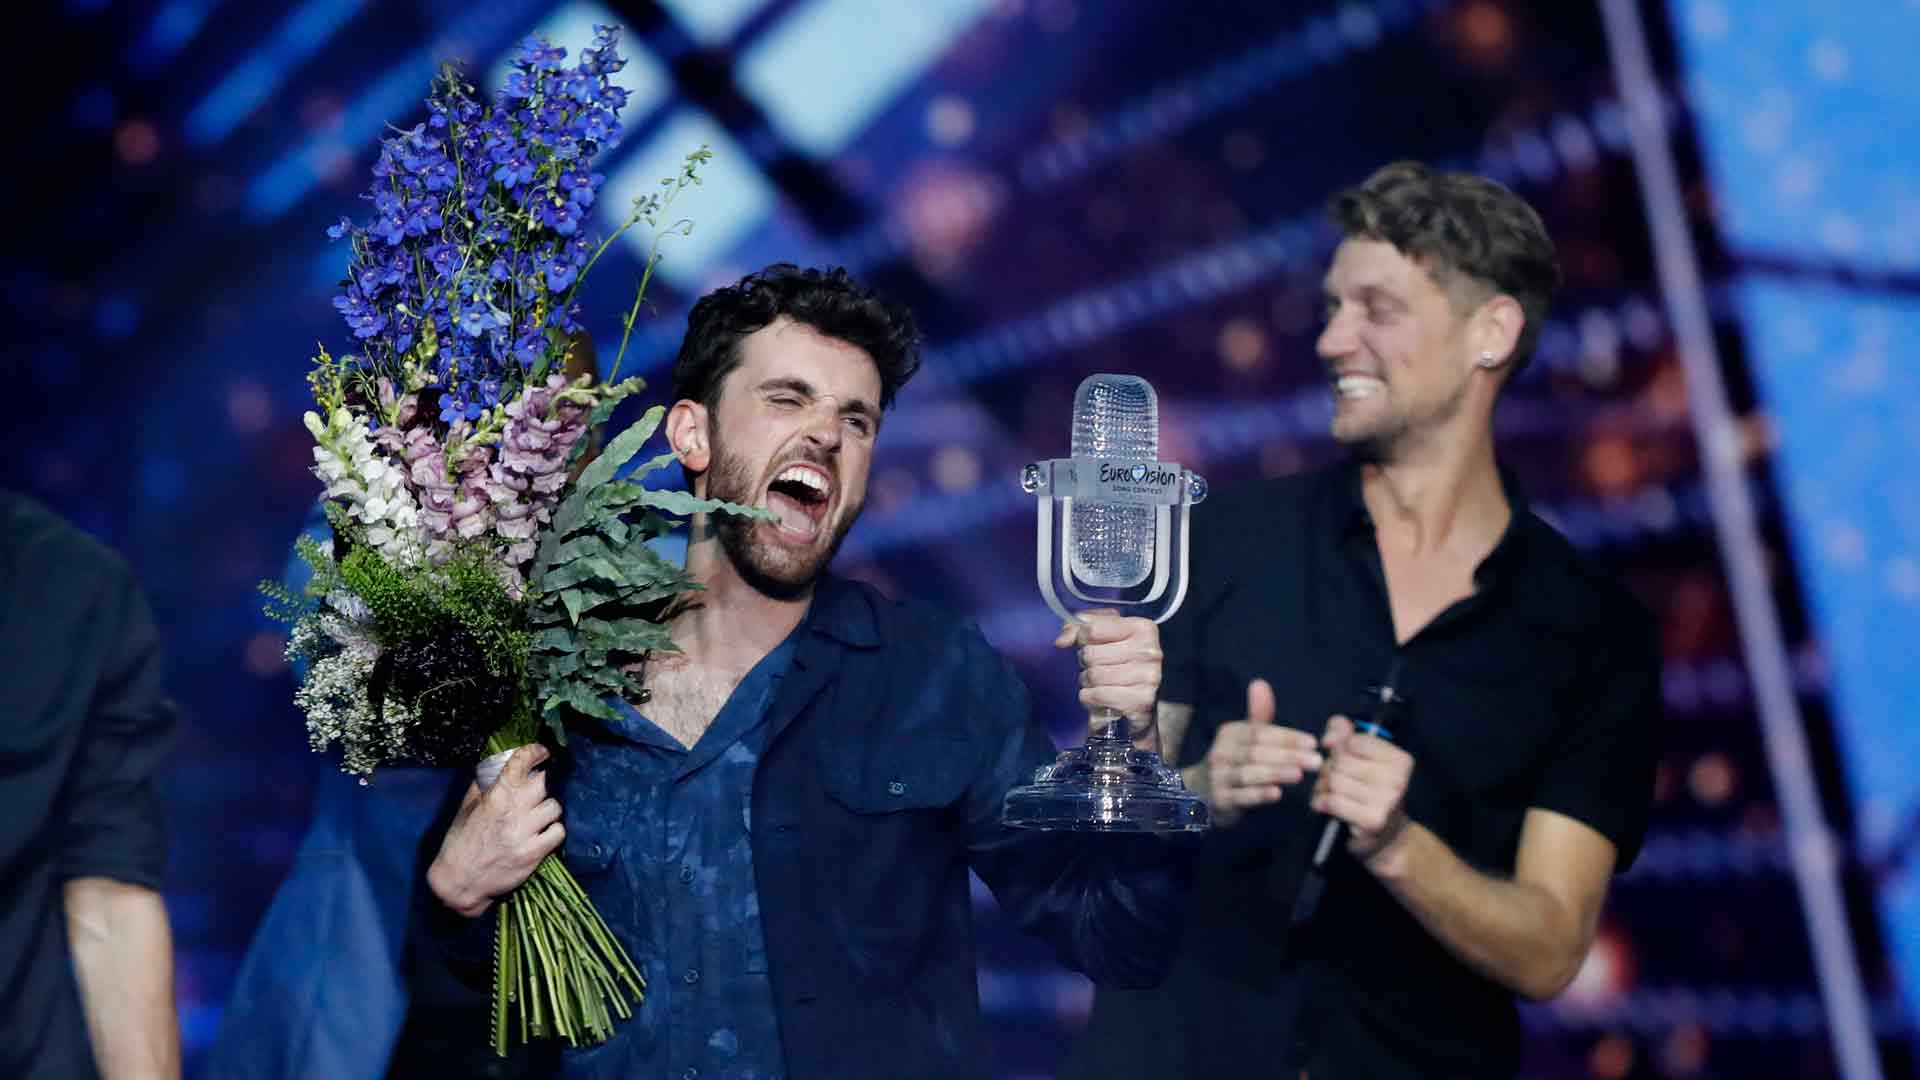 Rotterdam acogerá el Festival de Eurovisión de 2020